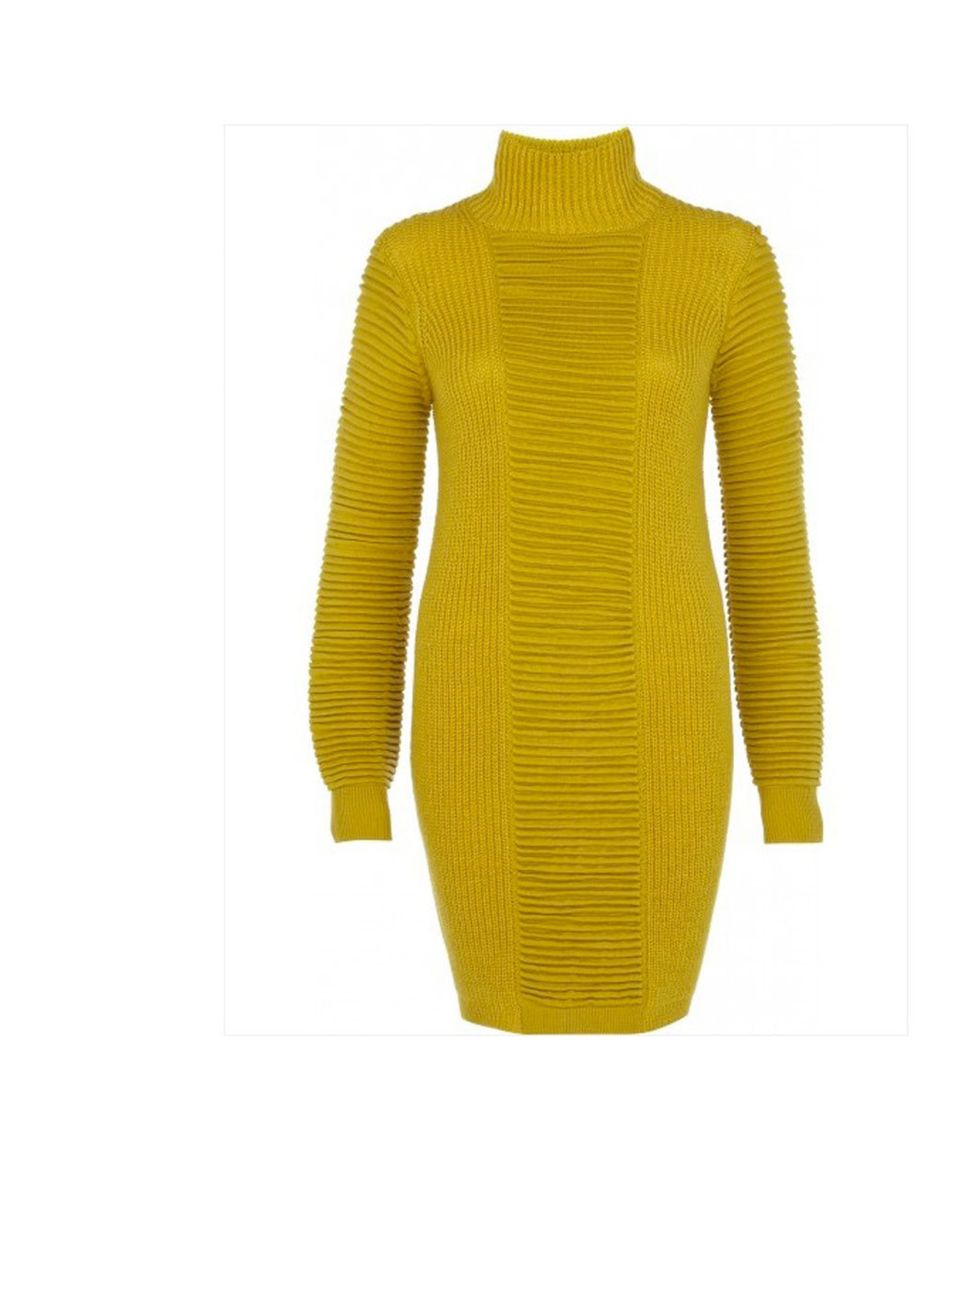 <p>Eudon Choi for River Island yellow jumper dress, £80.</p>